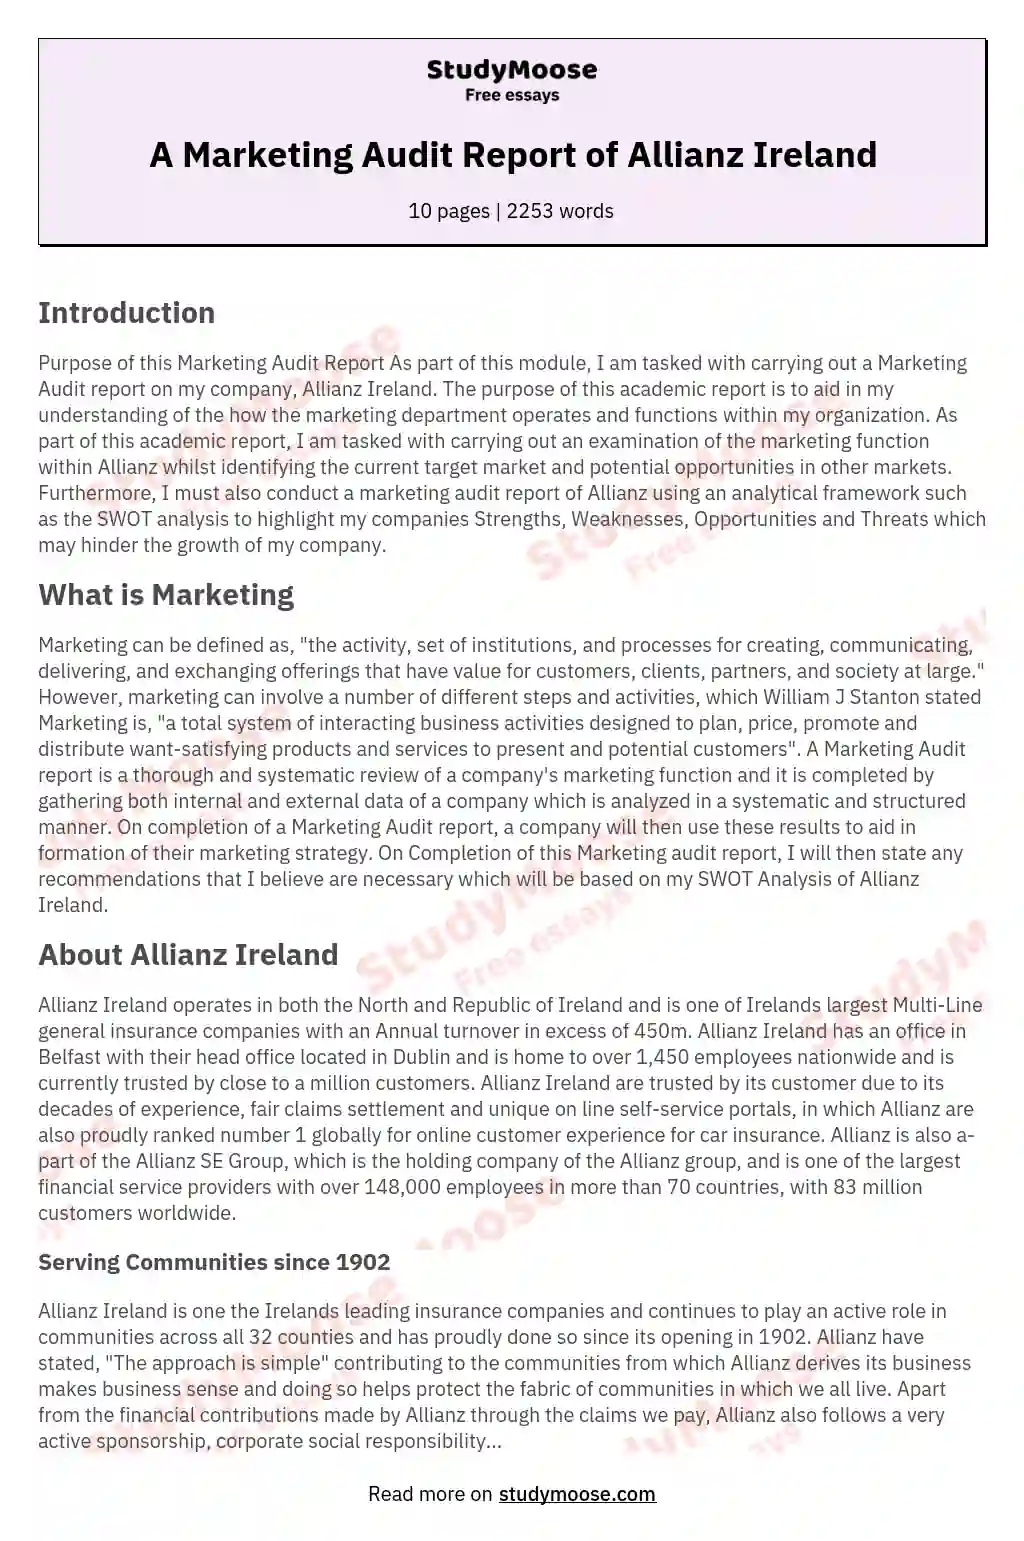 A Marketing Audit Report of Allianz Ireland